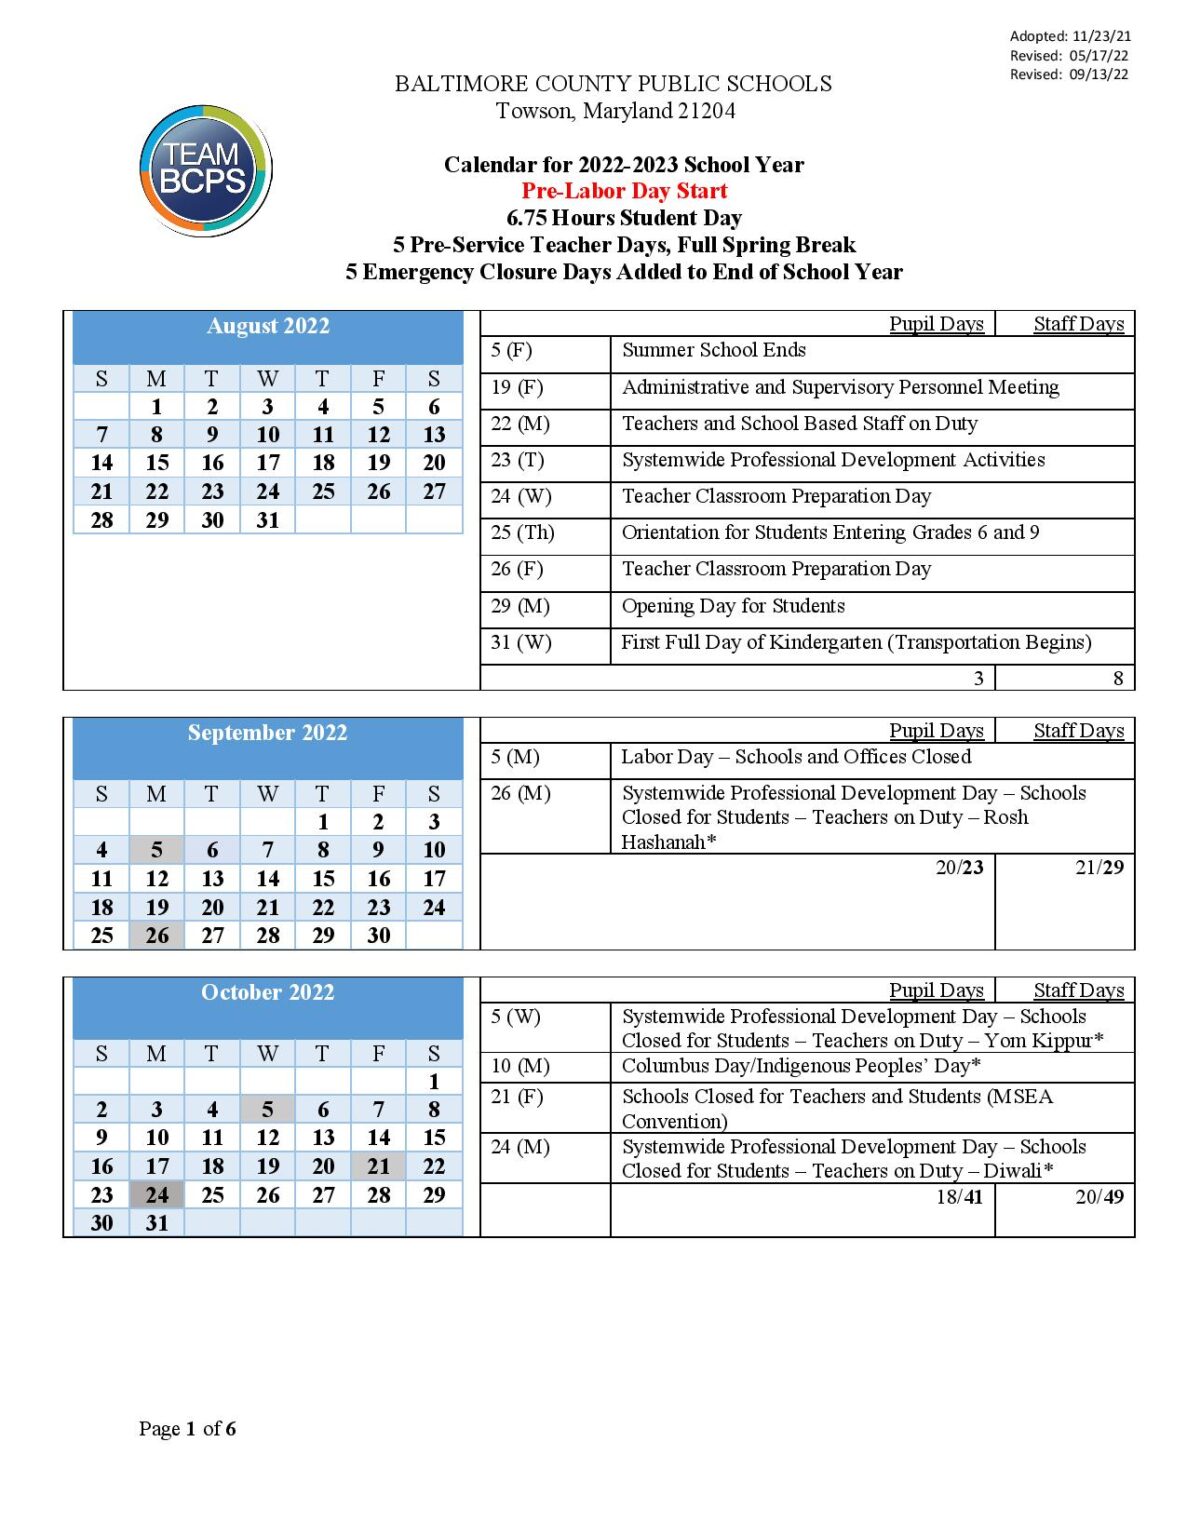 Baltimore County Public Schools Calendar Holidays 2022 2023